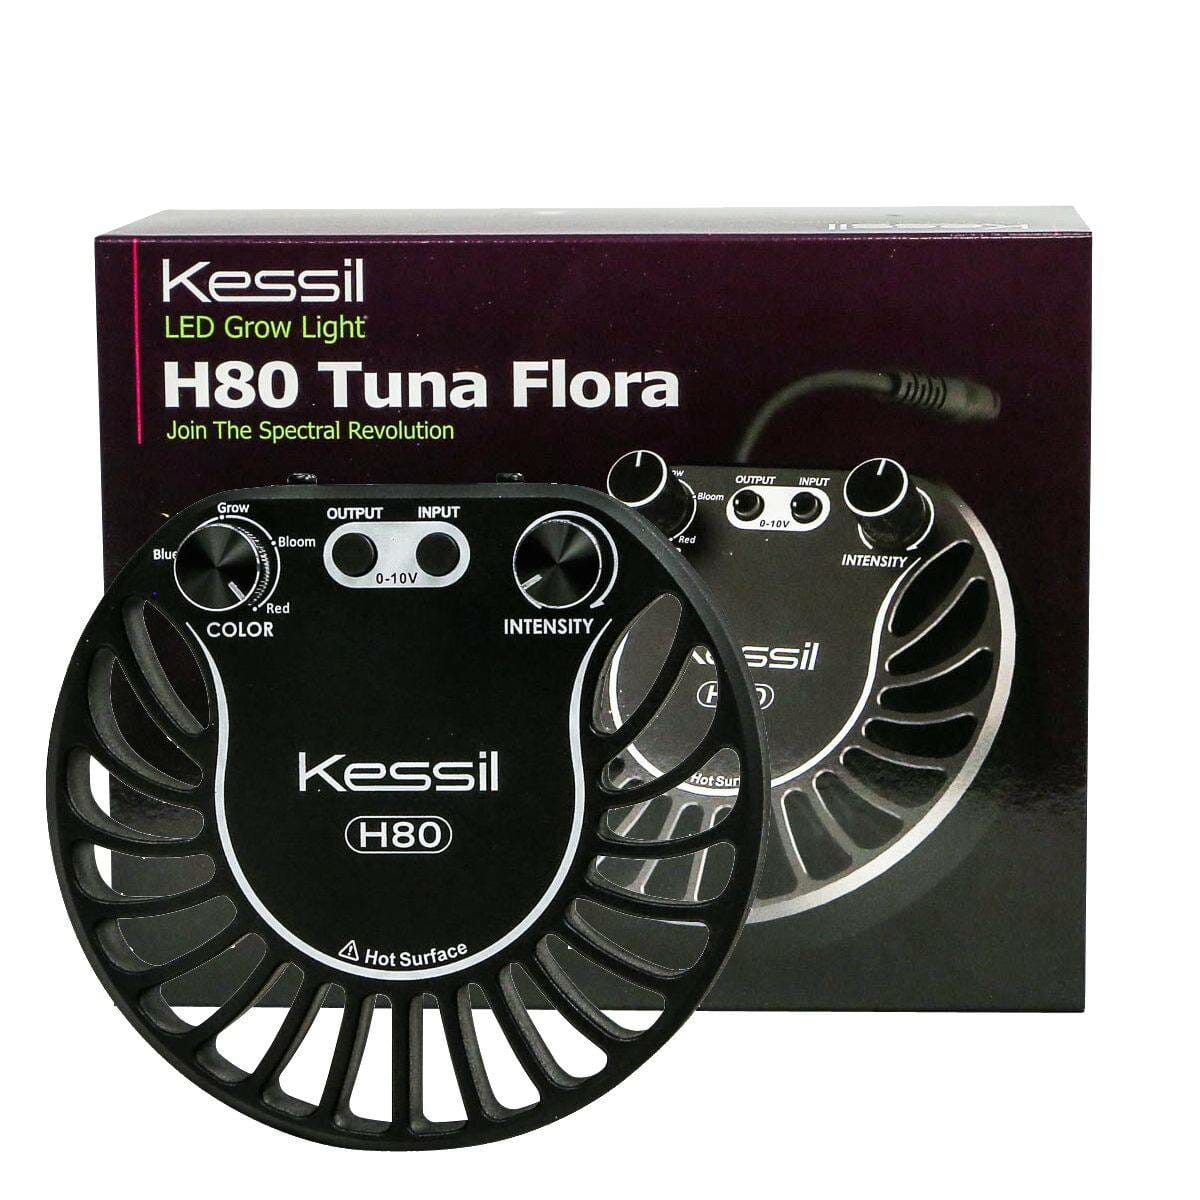 H80 Tuna Flora Refugium LED Light - Kessil